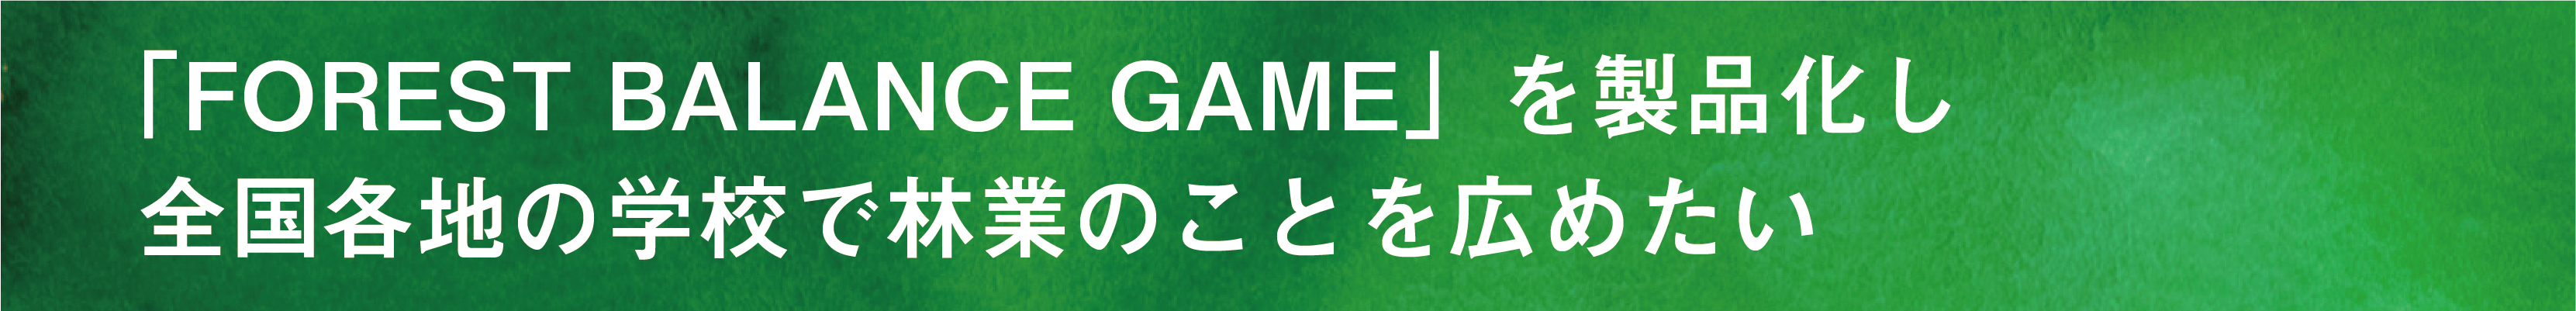 https://www.oco-s.jp/data/ec/276/林業ボードゲームクラファン見出し画像-05.jpg